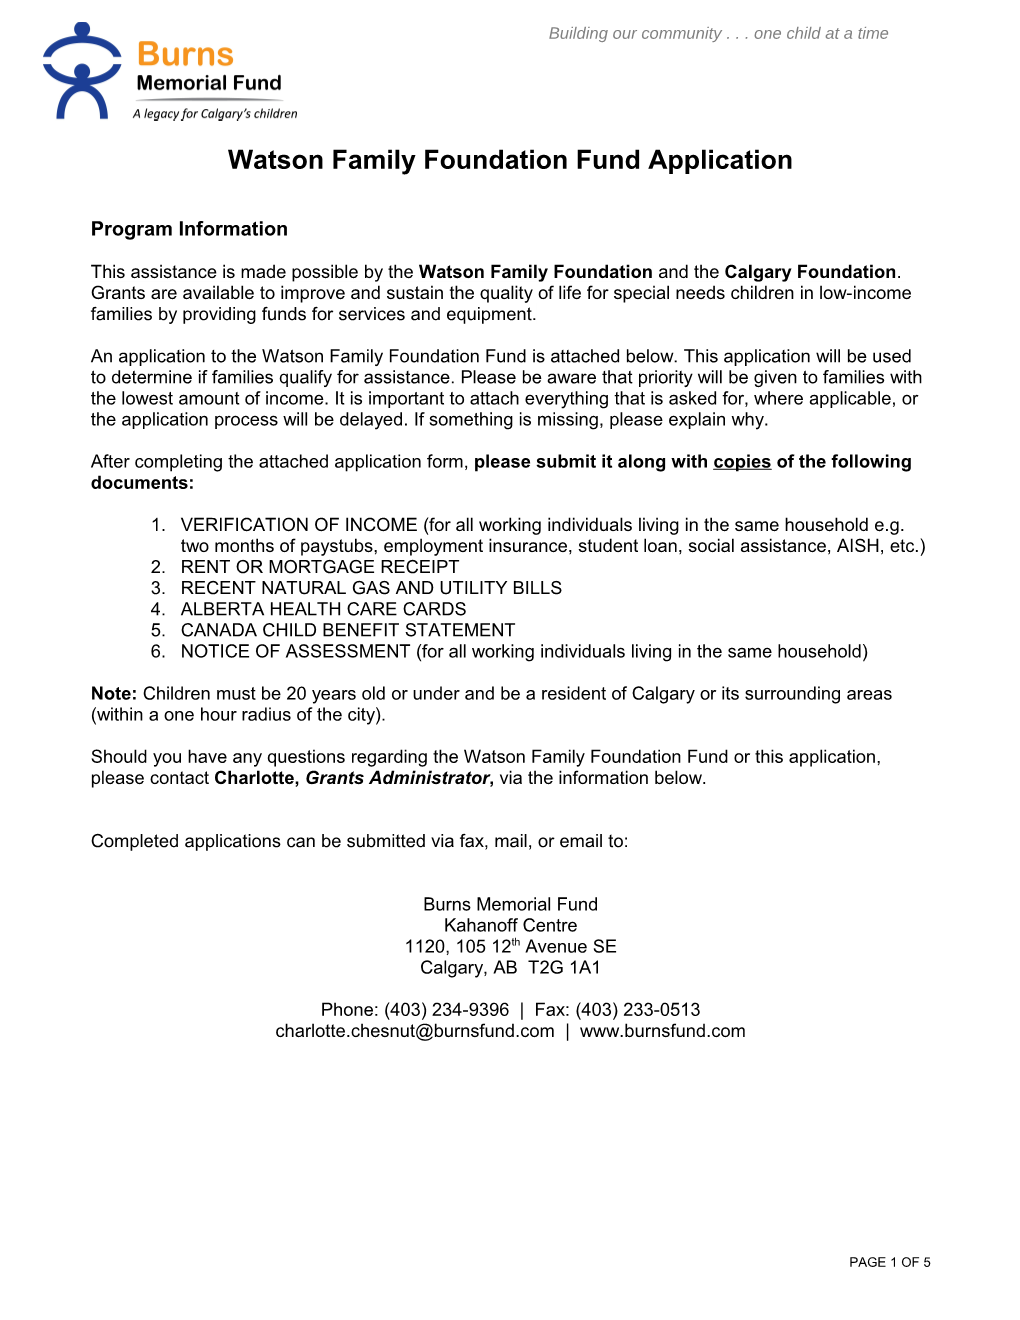 Watson Family Foundation Fund Application